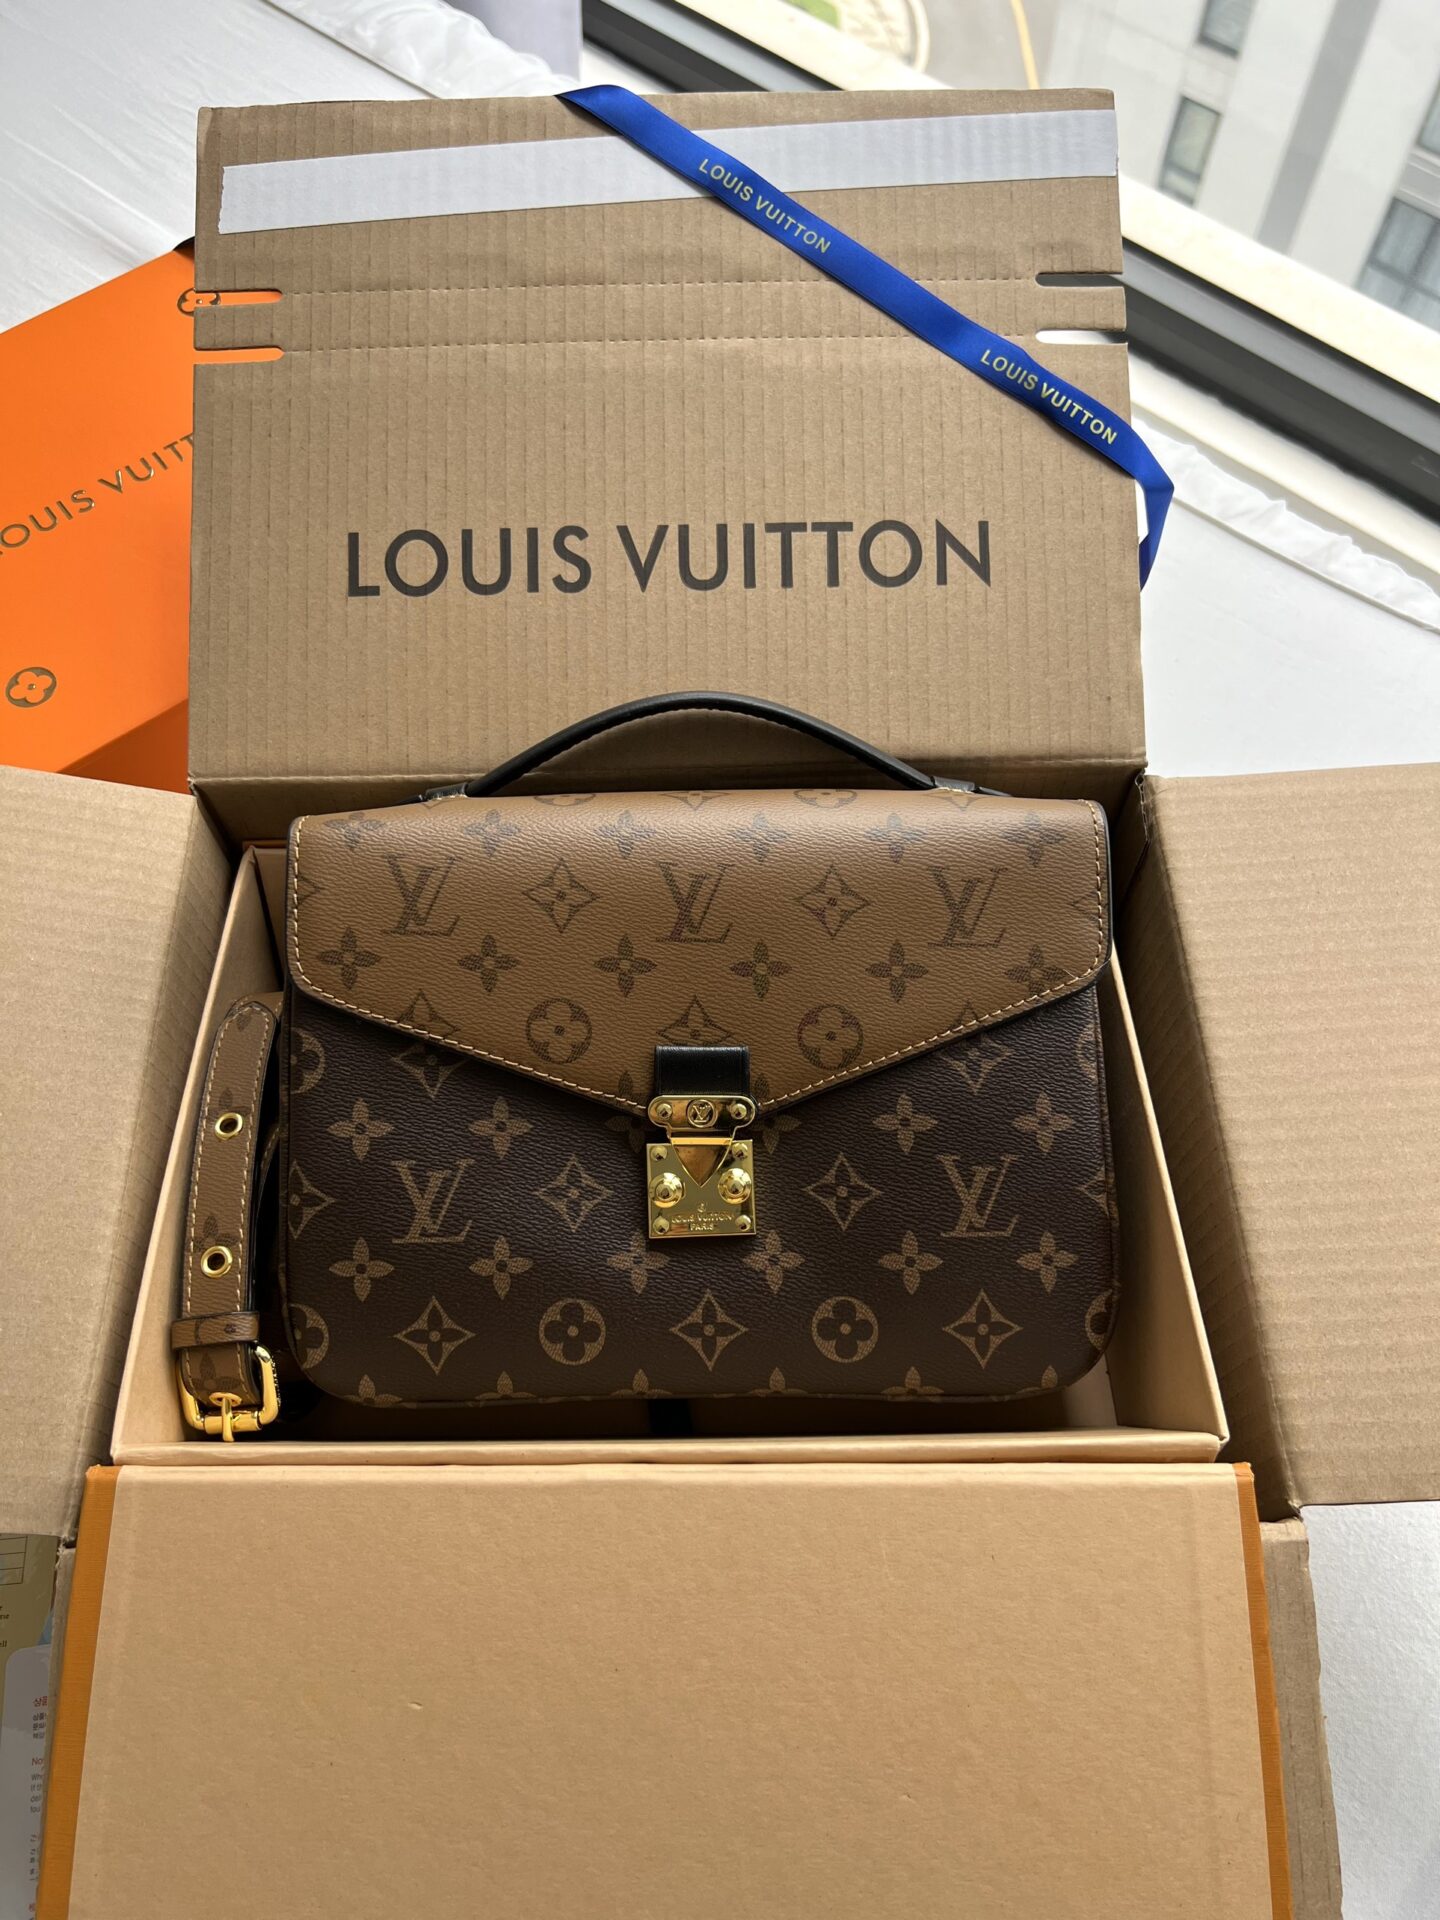 Louis Vuitton Pochette Metis Review - Hello Gorgeous, by Angela Lanter  Louis  vuitton pochette metis, Louis vuitton pochette metis outfit, Pochette metis